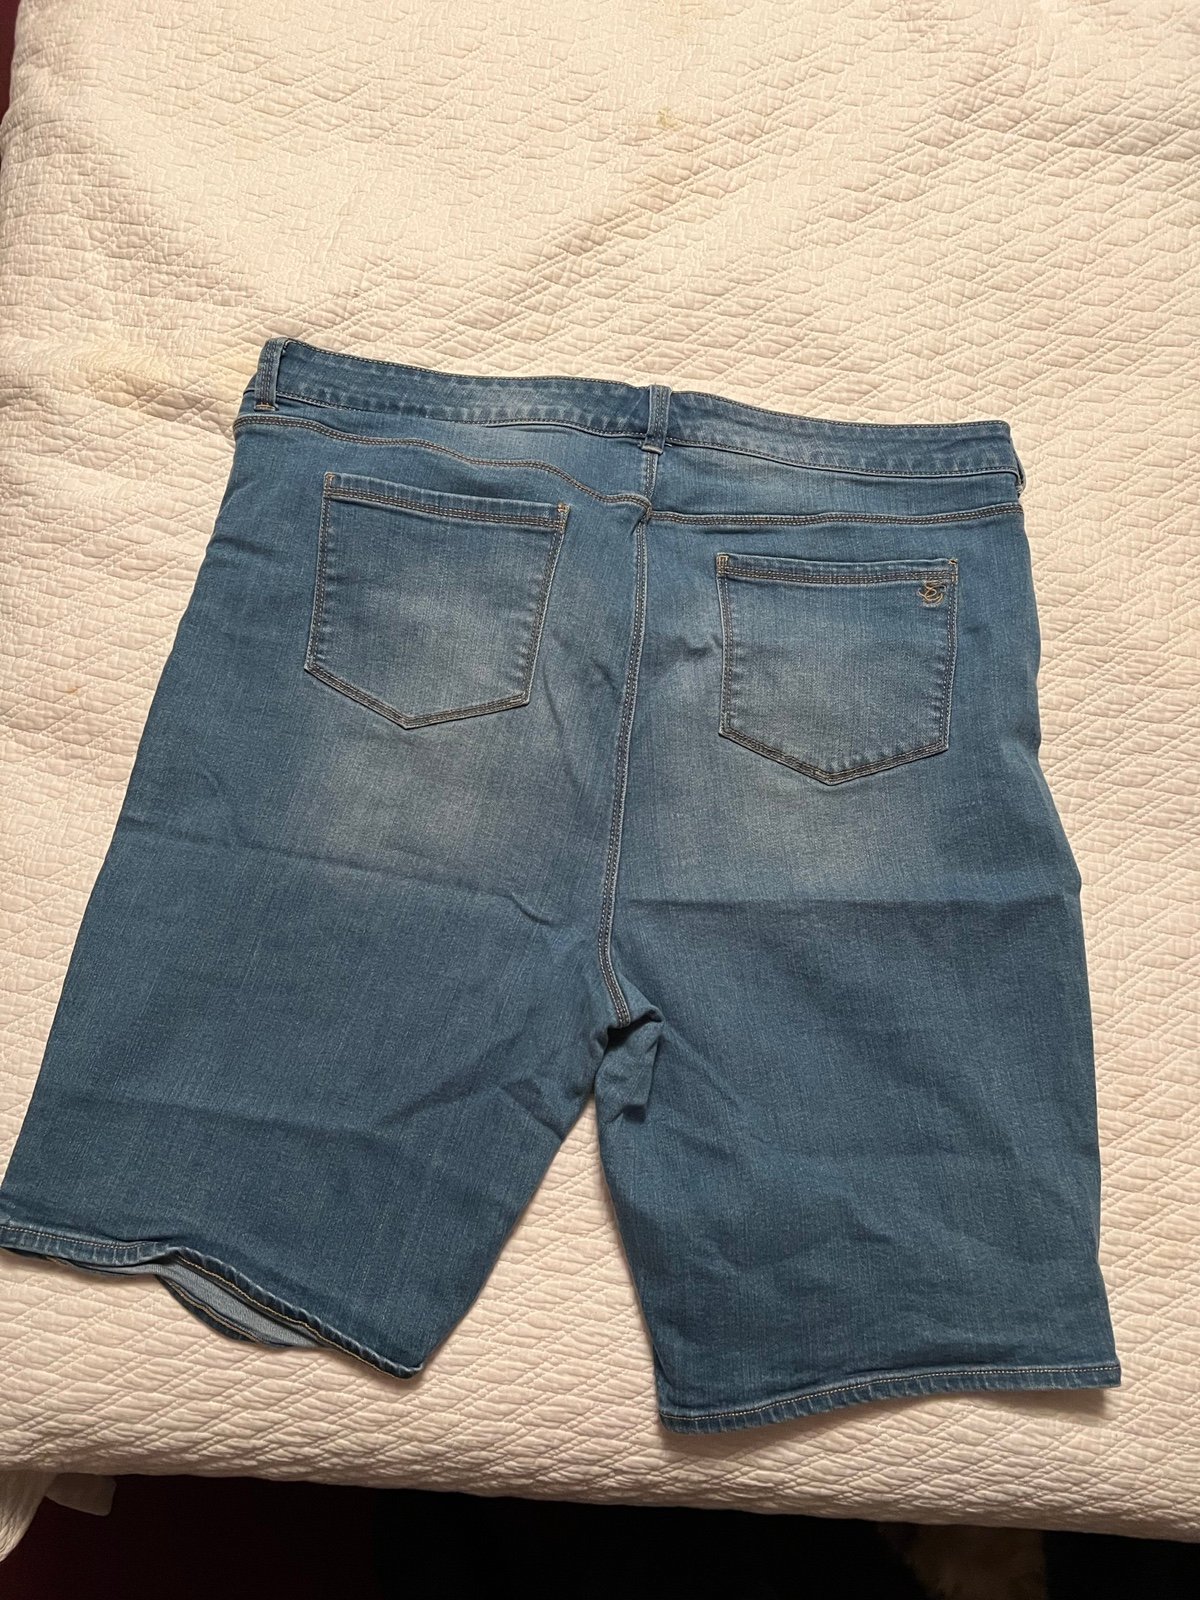 Exclusive womens jean shorts on8KmgDD7 just buy it